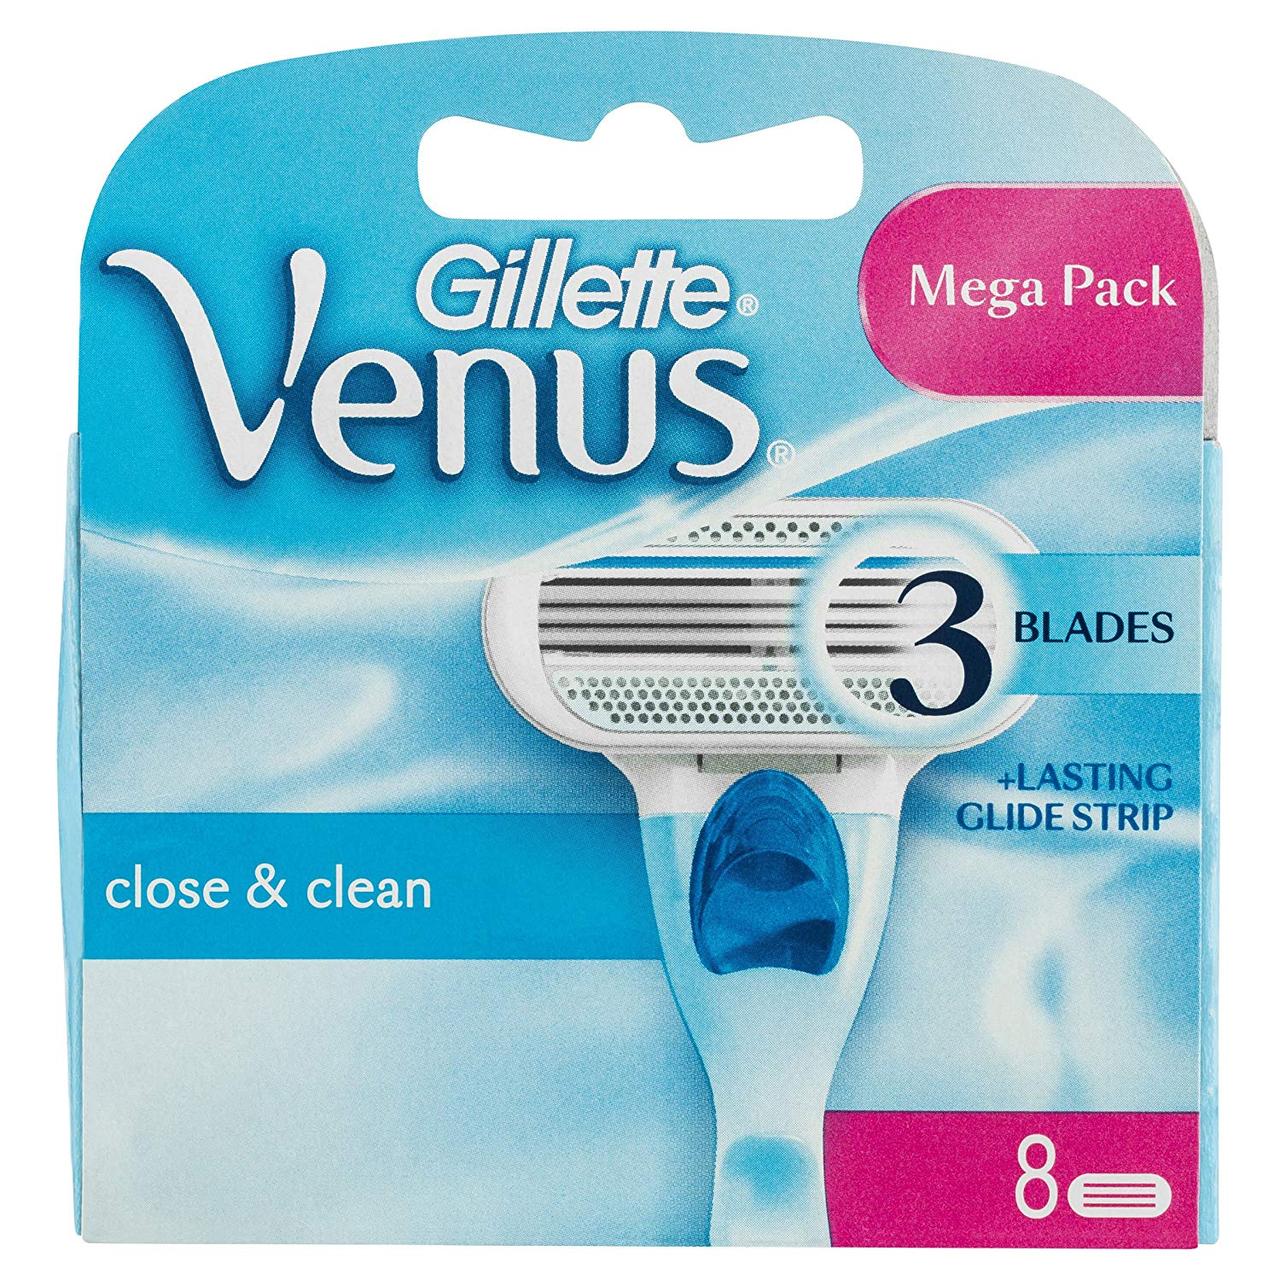 Картридж Gillette "Venus" (8)